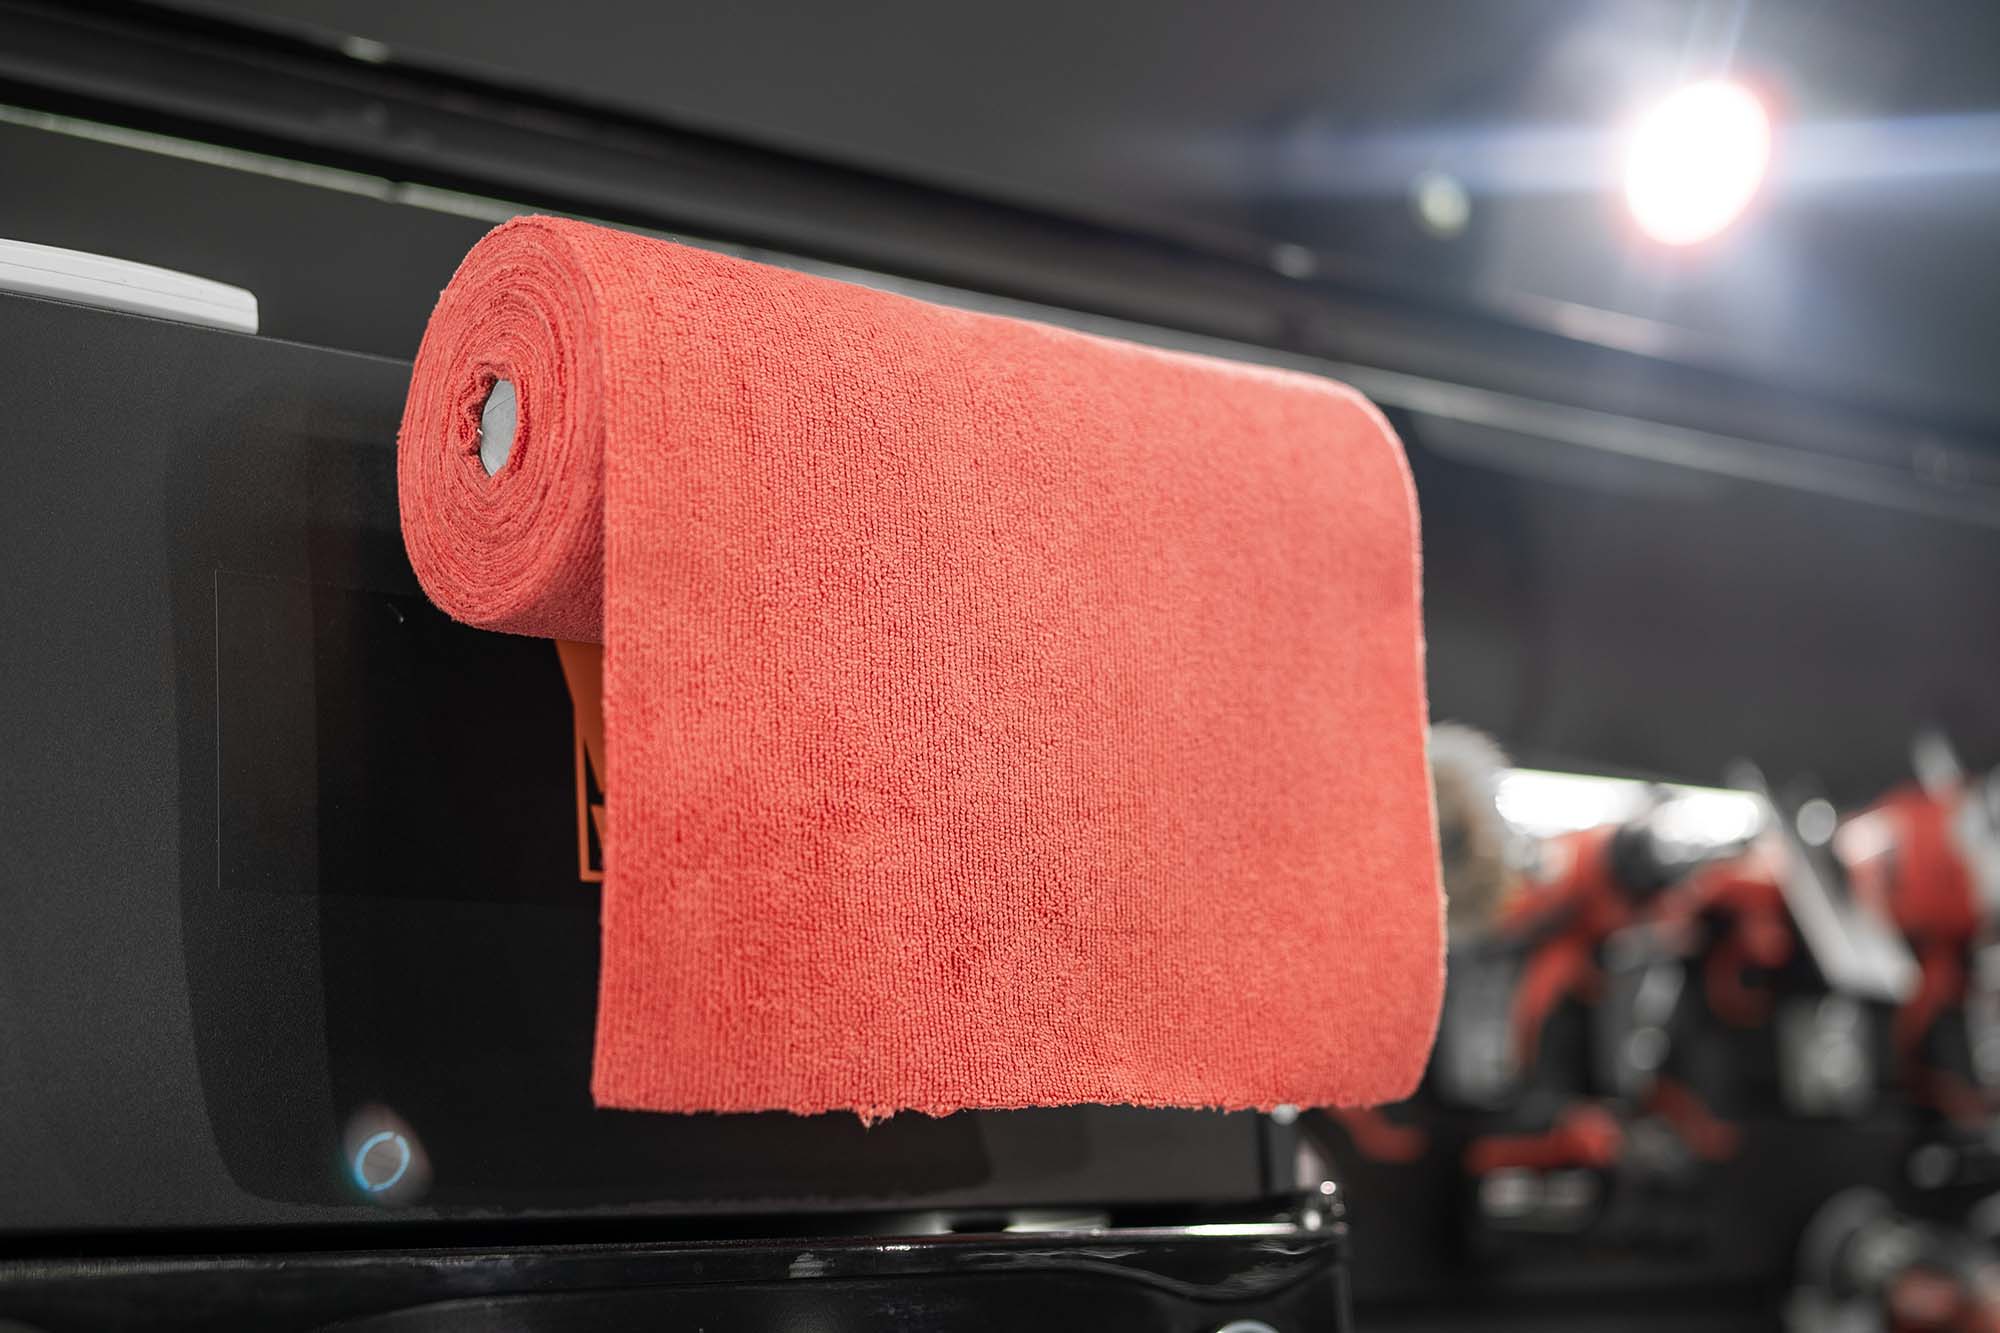 Microfiber Car Wash Rags  Car Wash & Cleaning Cloth — Autofiber